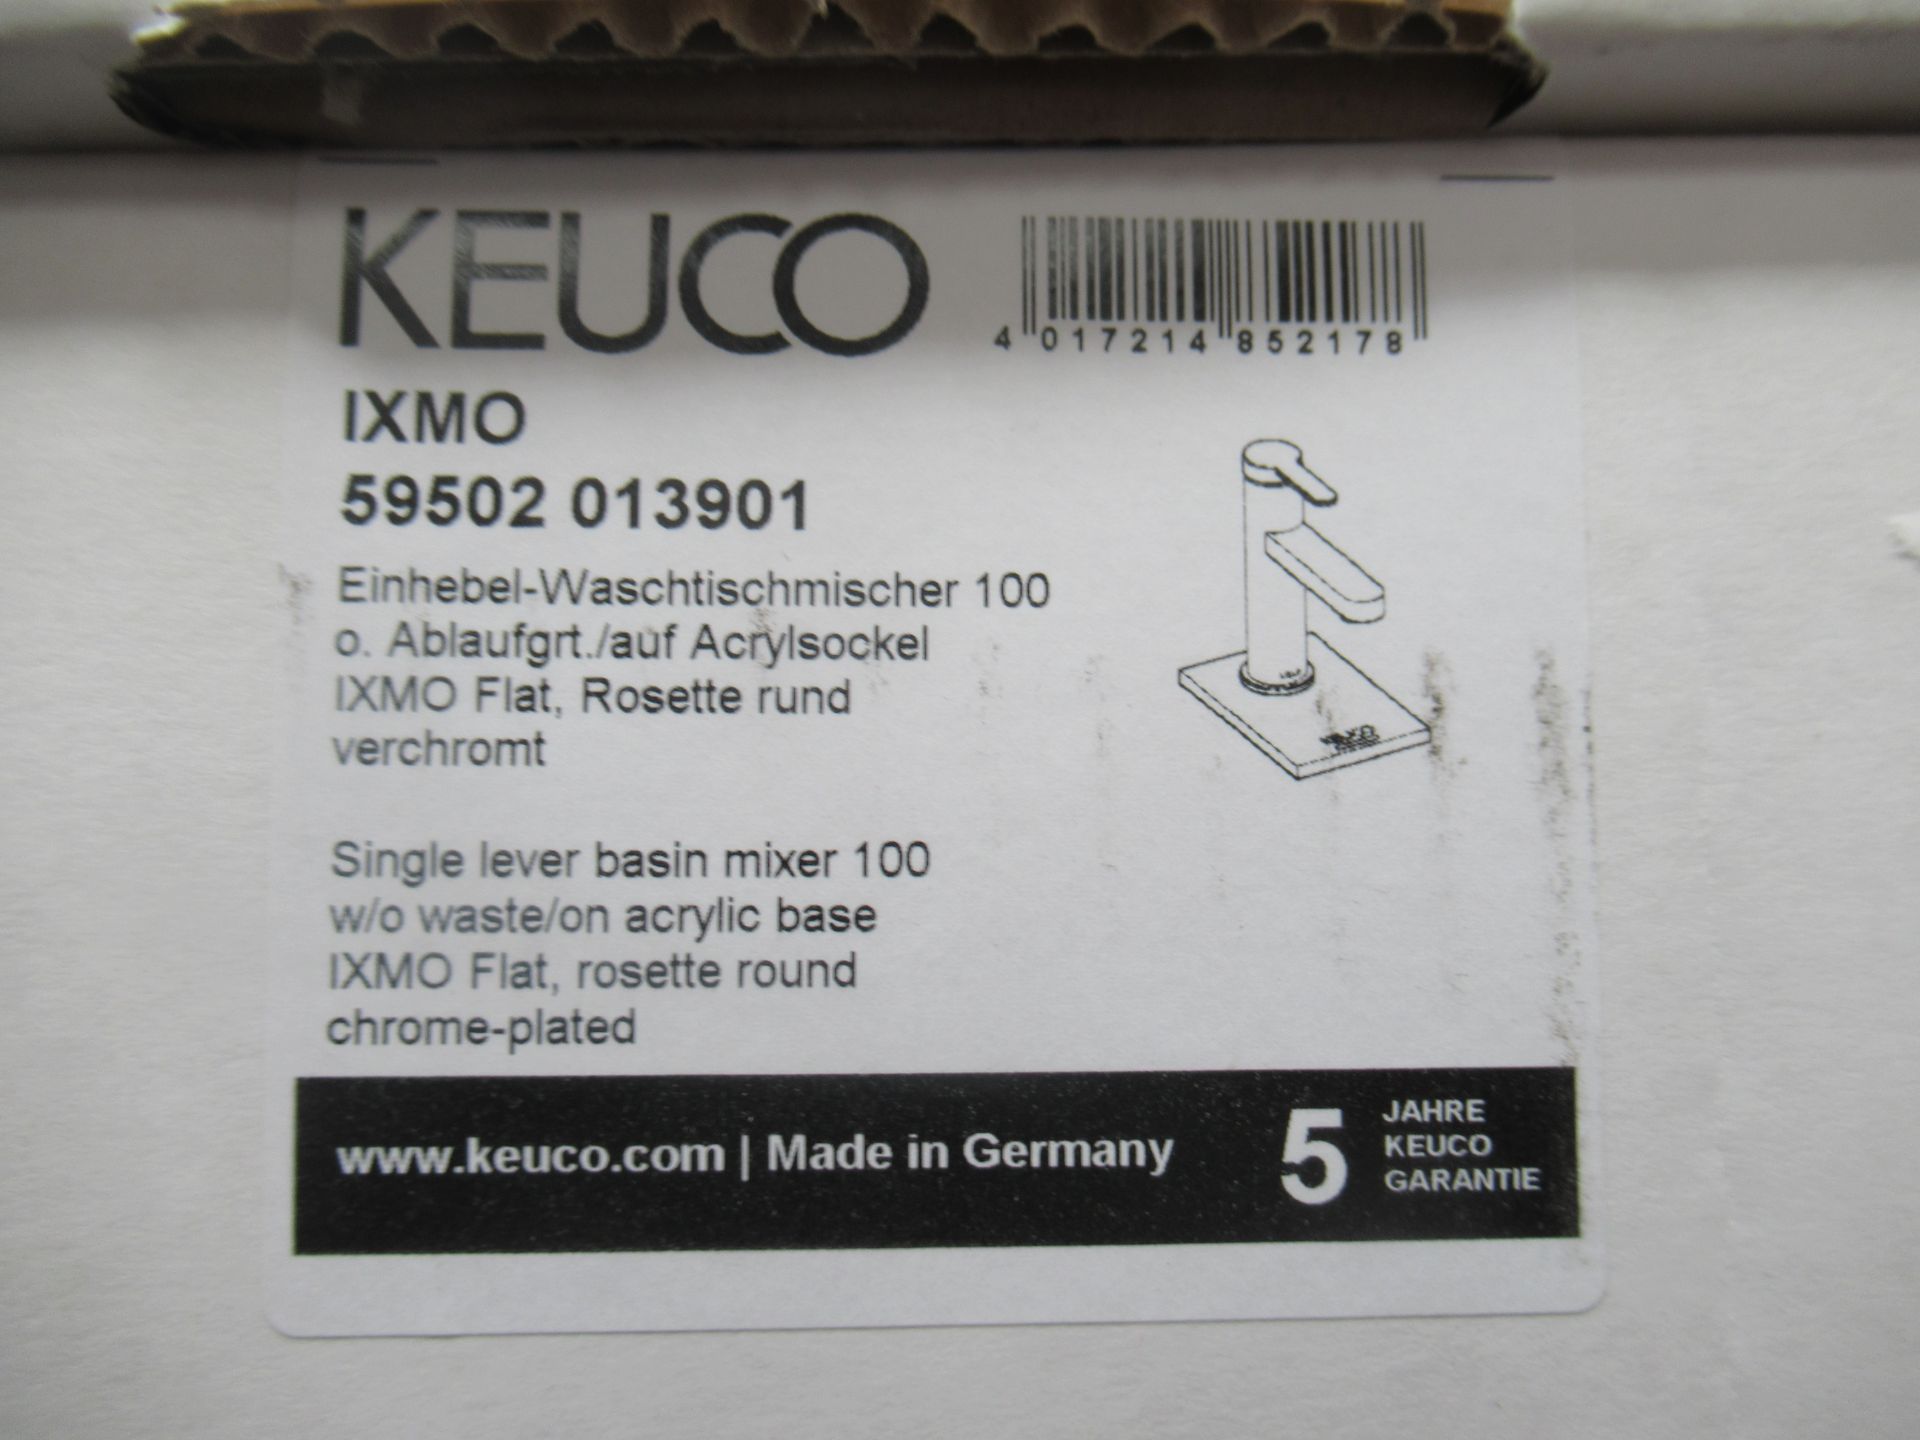 2 x Keuco IXMO Single Lever Basin Mixer 100-Tap, Chrome Plated, P/N 59502-013901 - Image 2 of 3